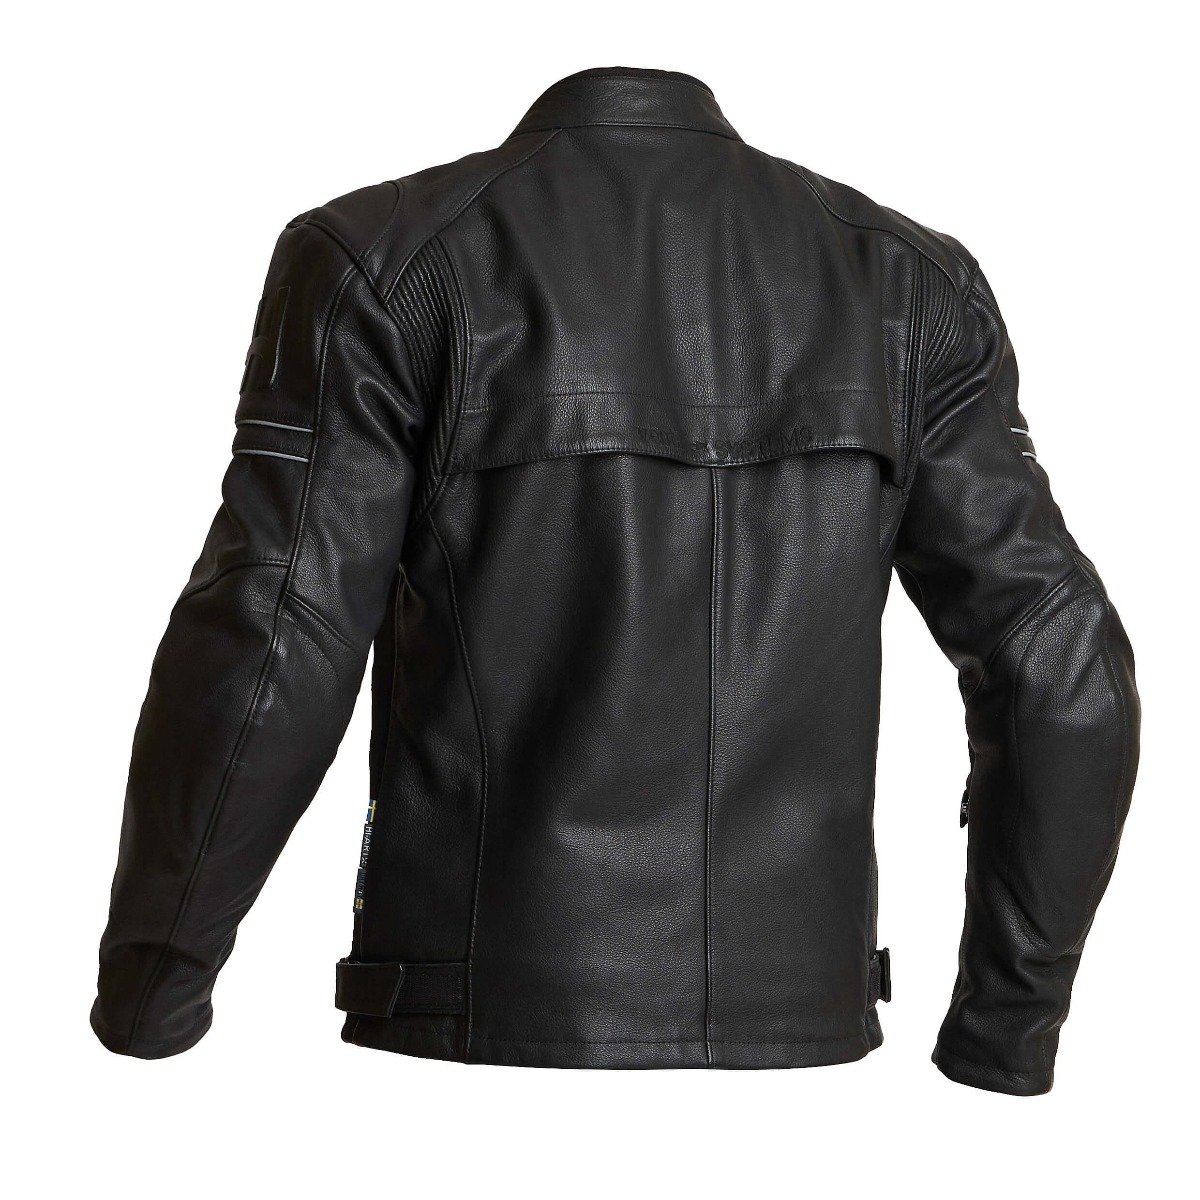 Image of Halvarssons Selja Jacket Black Size 52 EN